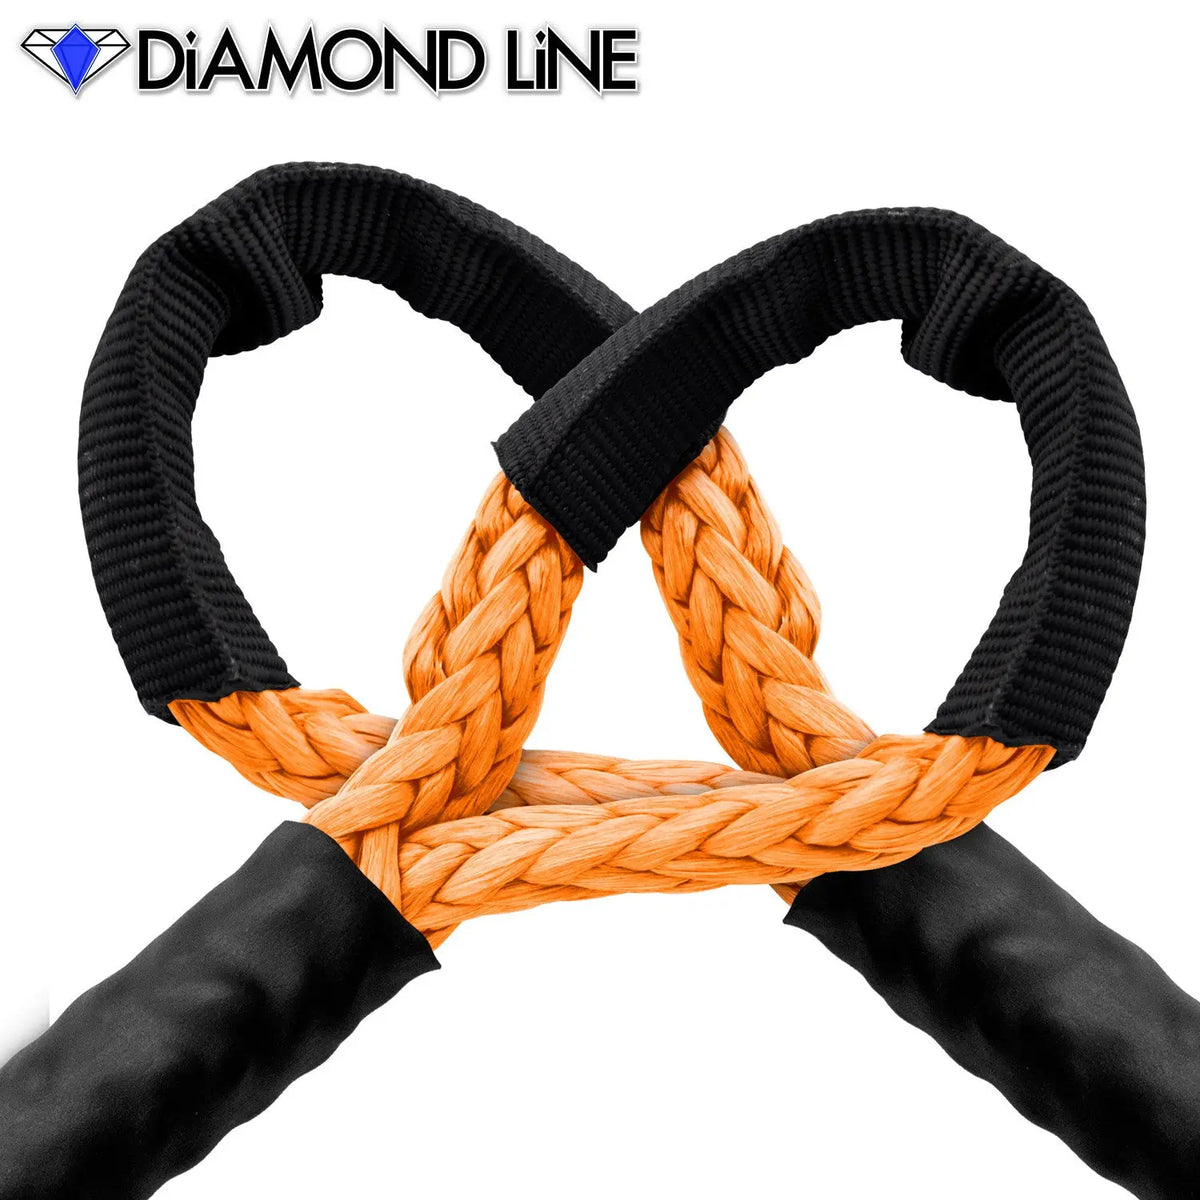 5/16 Extension - Diamond Line Winch Rope - Custom Splice